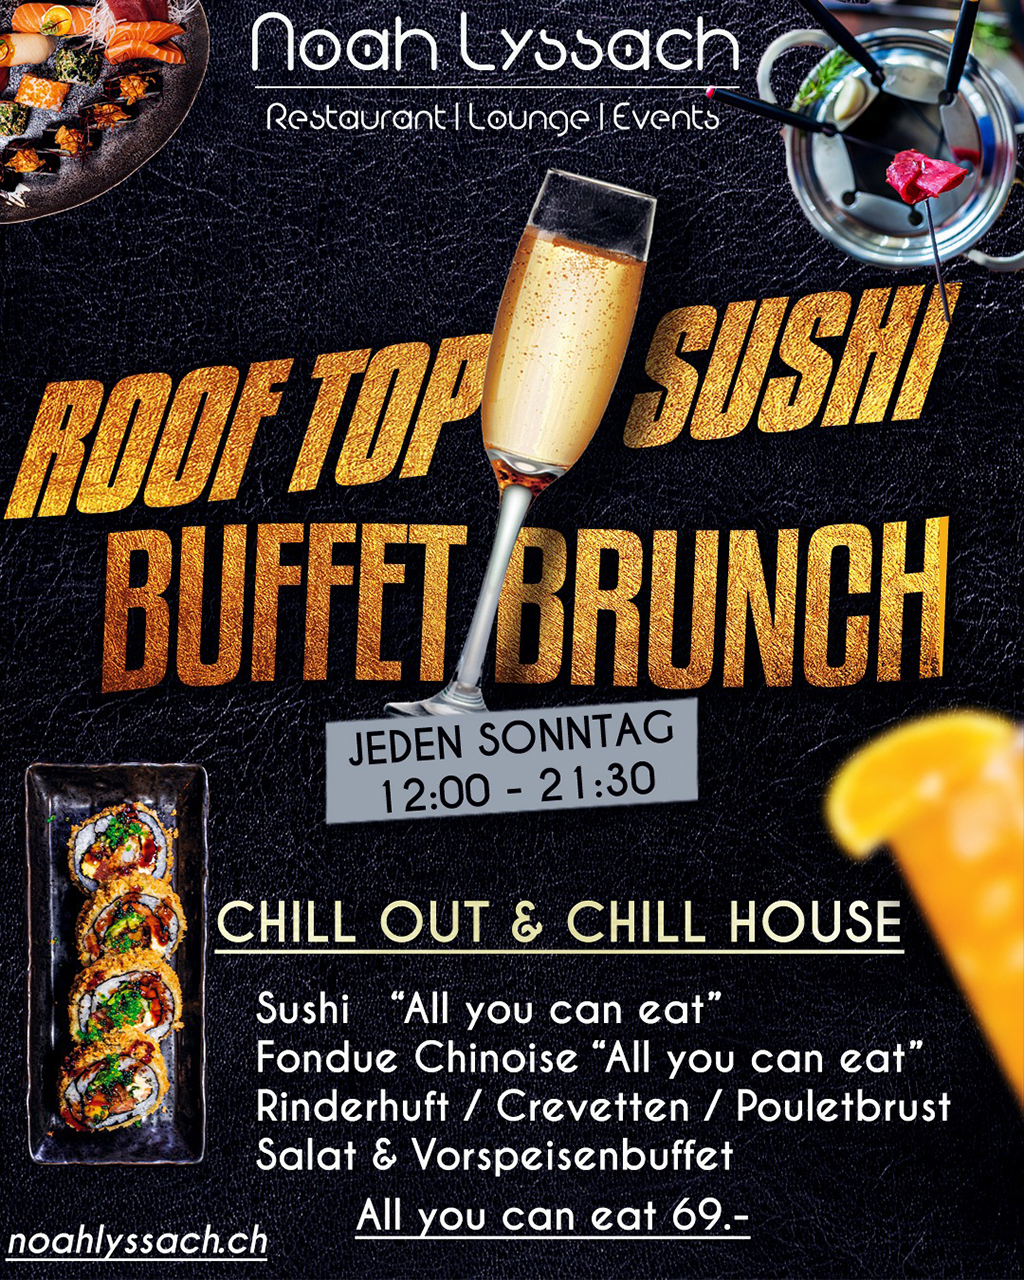 rooftop-sushi-buffet-brunch